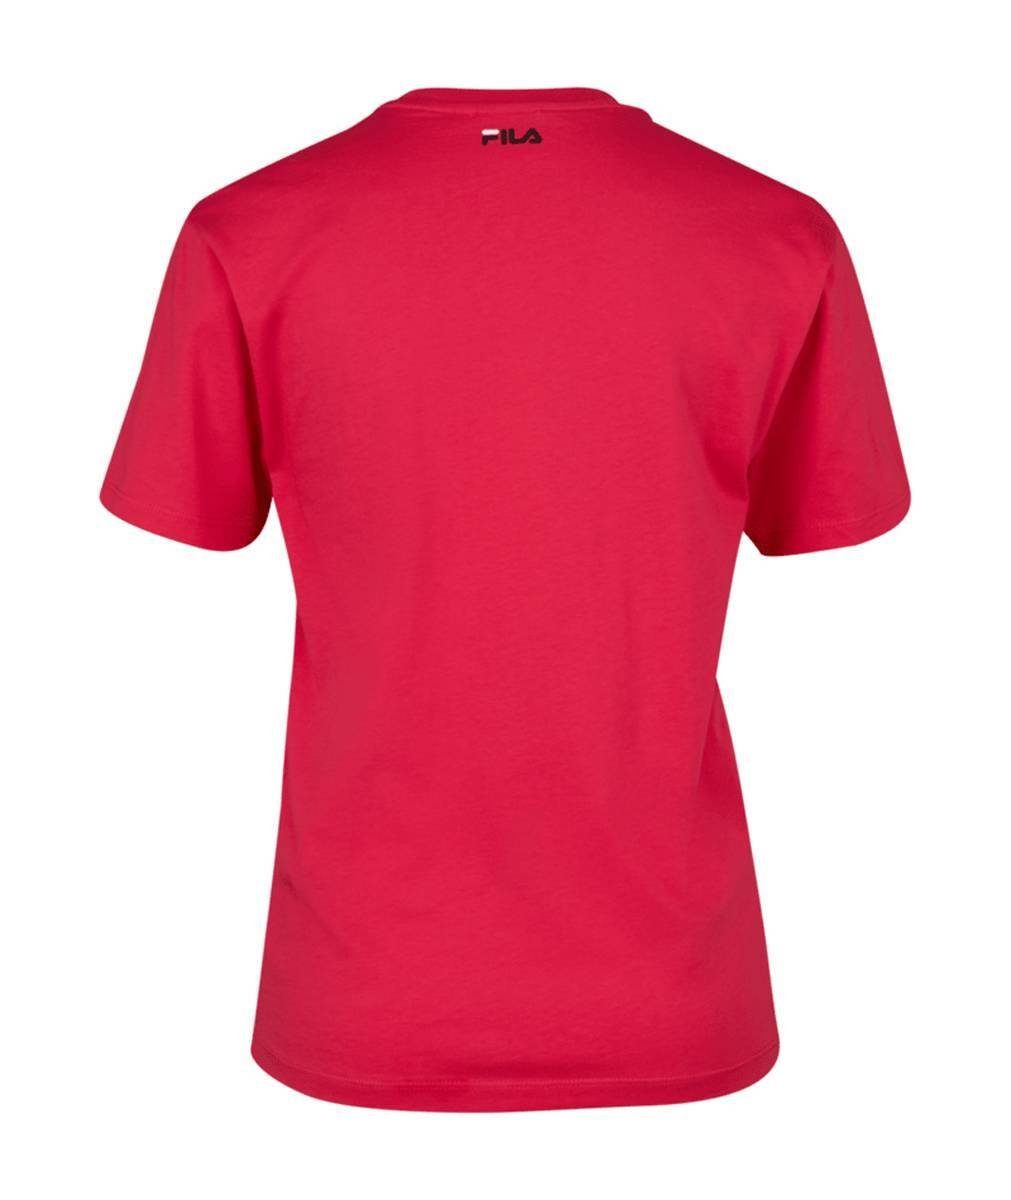 Damen - Rot tee, Rundhals, Kurzarm Fila T-Shirt BIGA T-Shirt